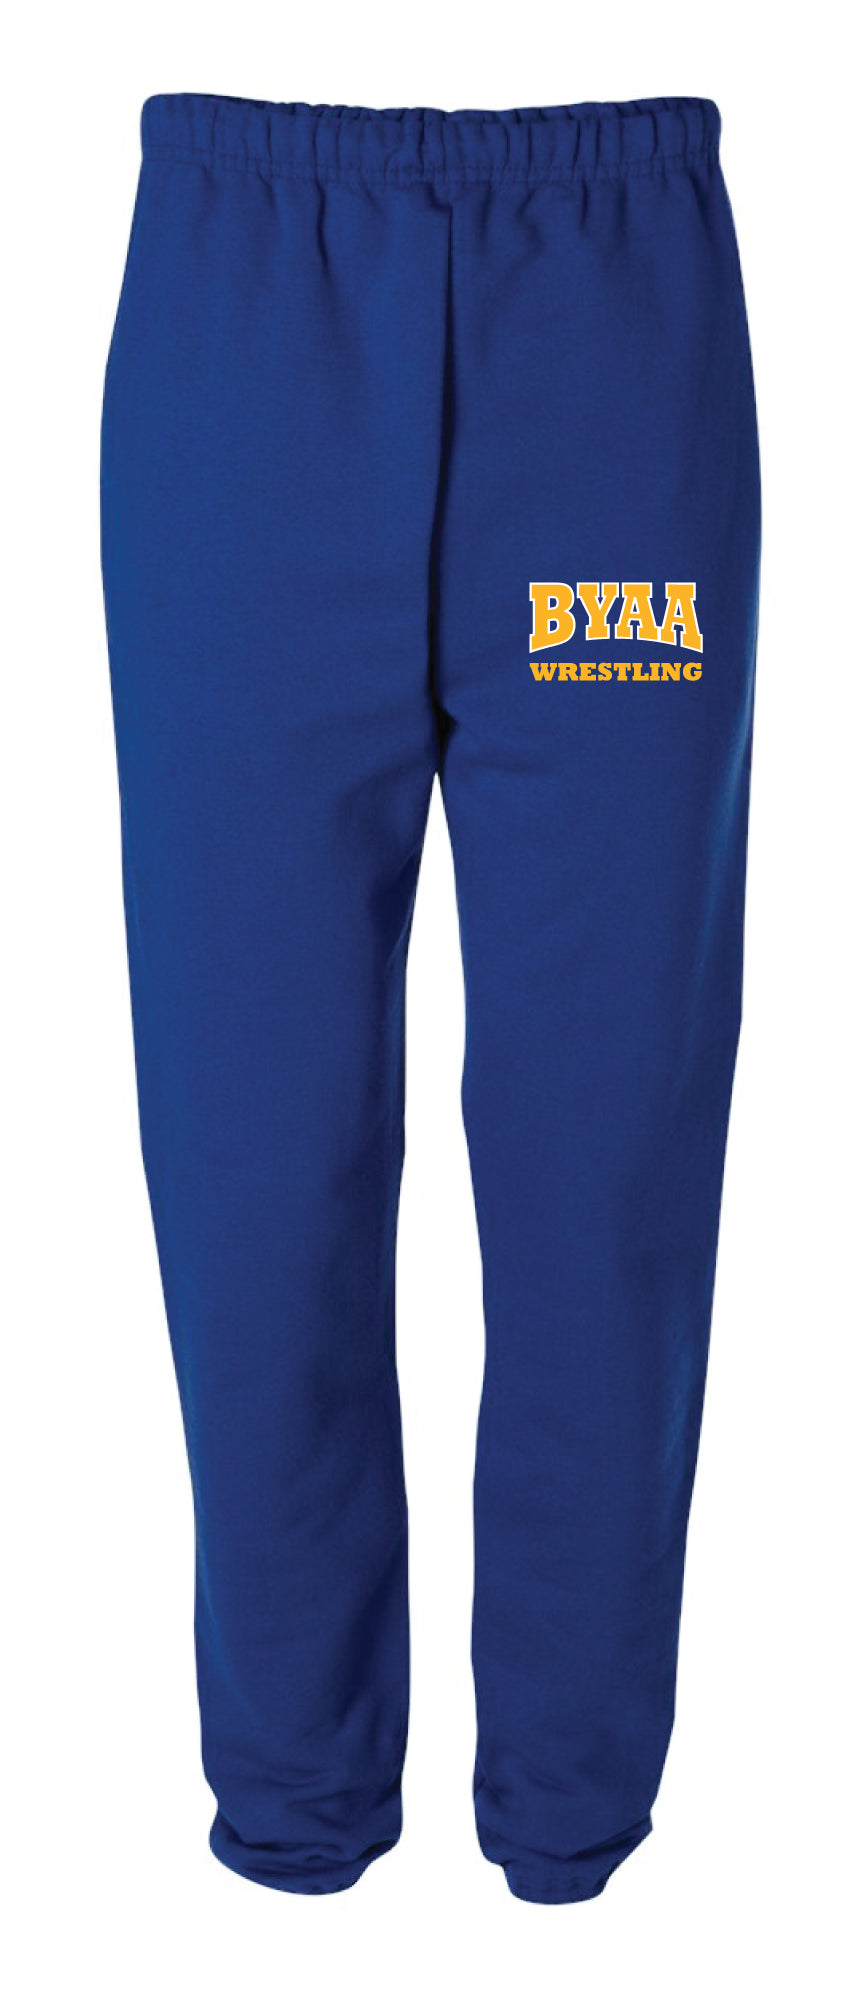 BYAA Cotton Sweatpants - Royal - 5KounT2018